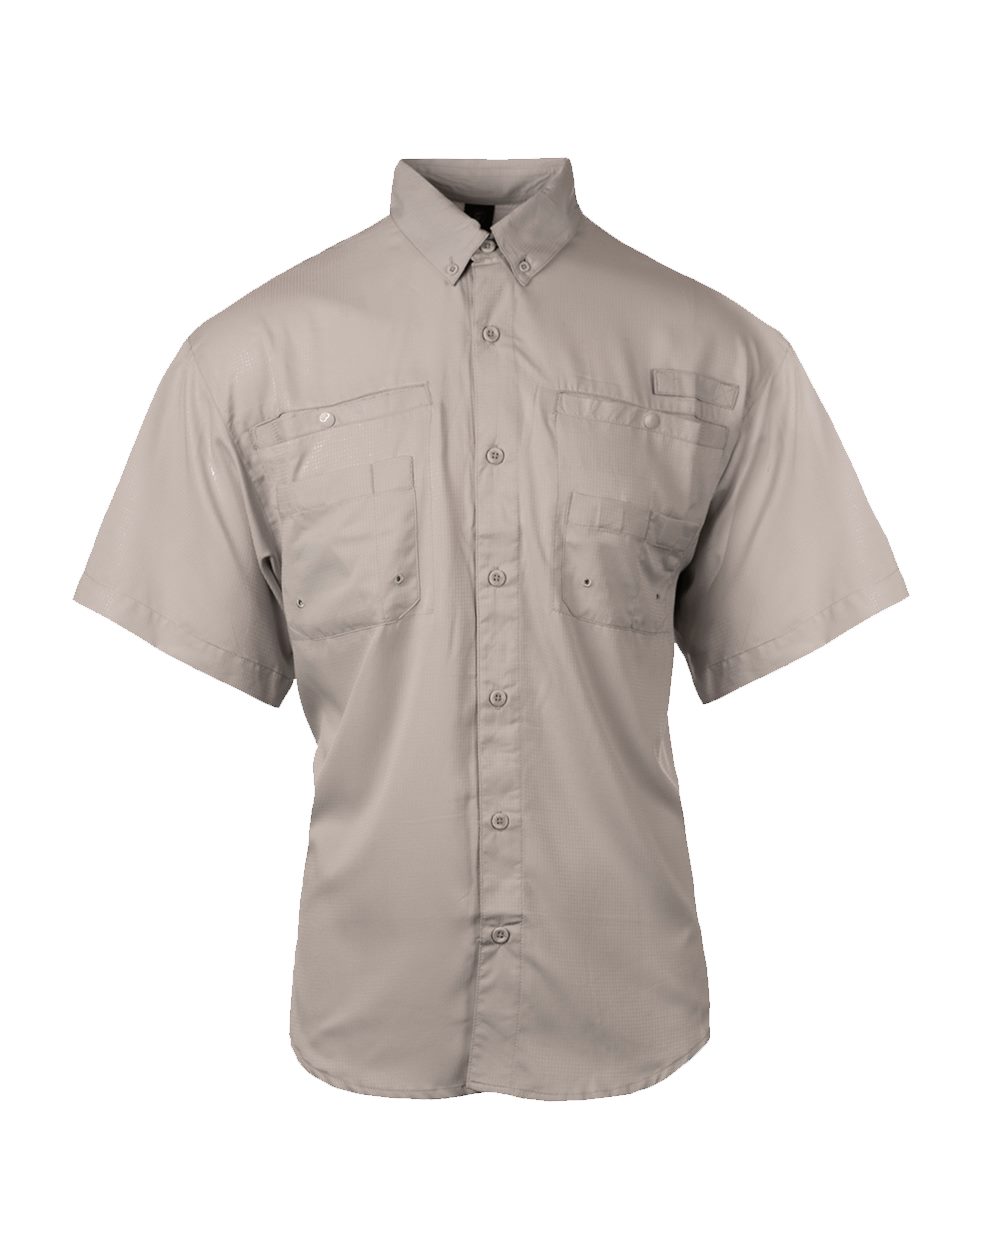 Paragon 700 Hatteras Performance Short Sleeve Fishing Shirt - White S